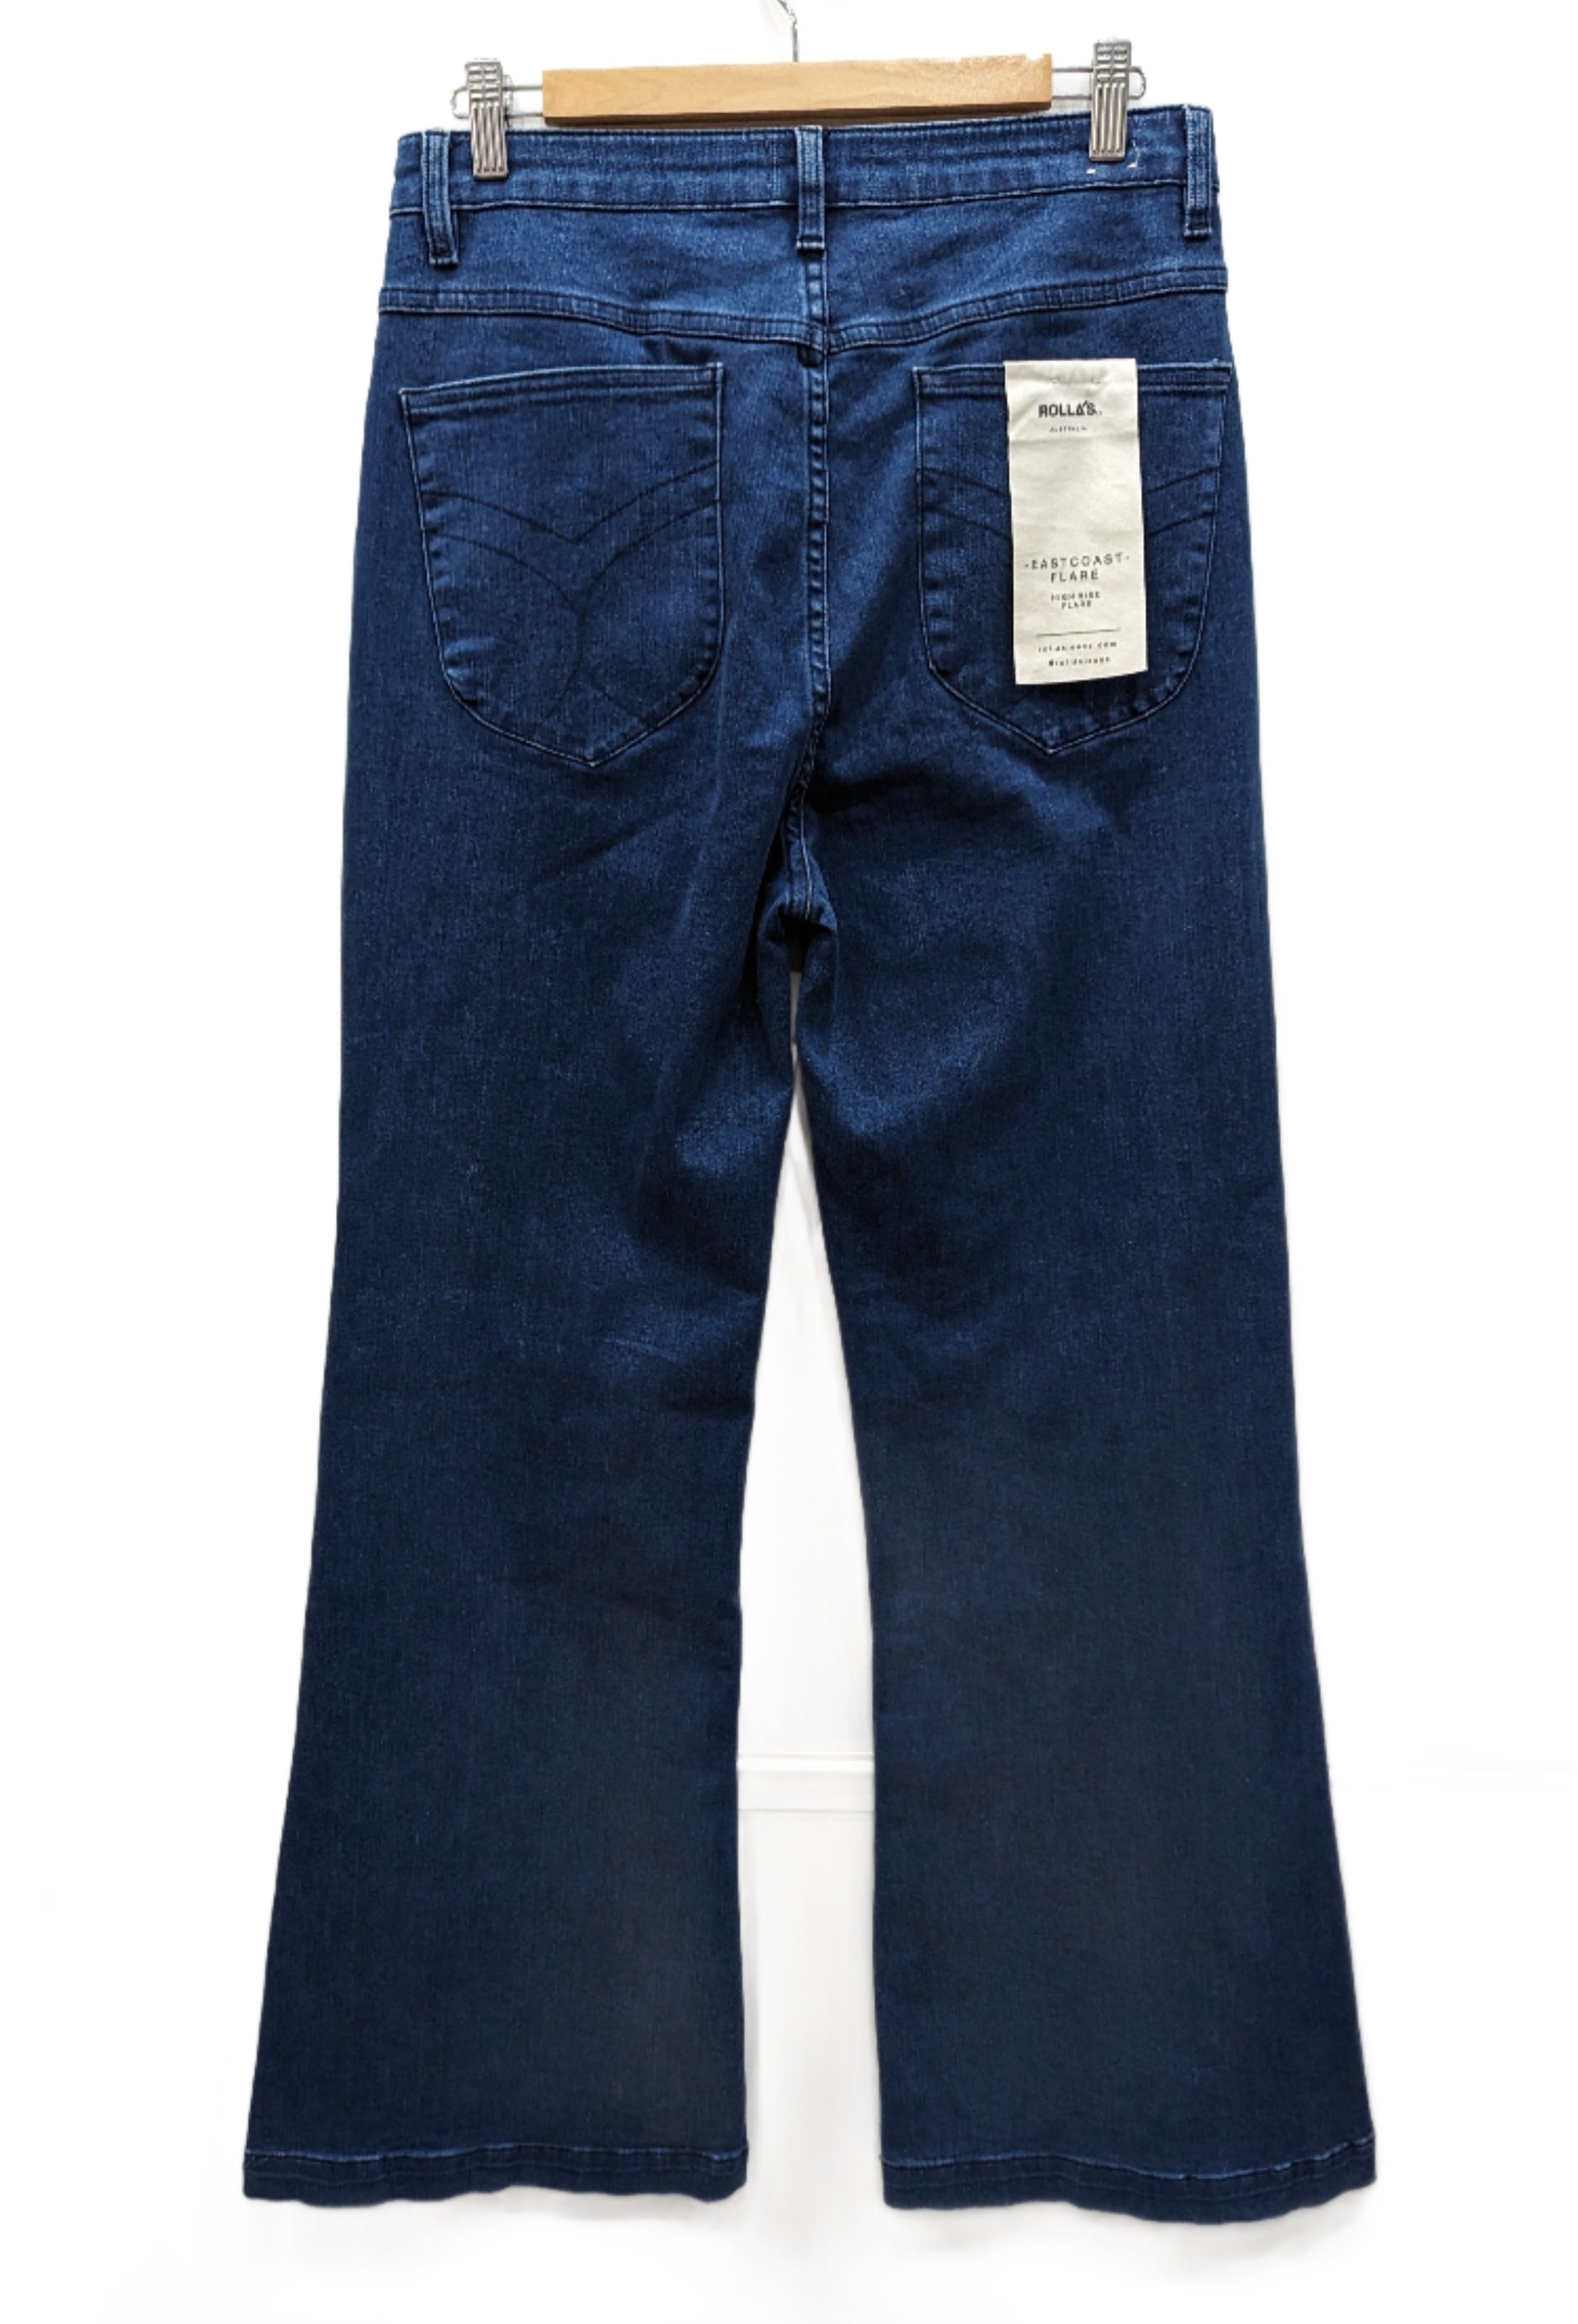 Rolla's Blue Denim Flared Jeans